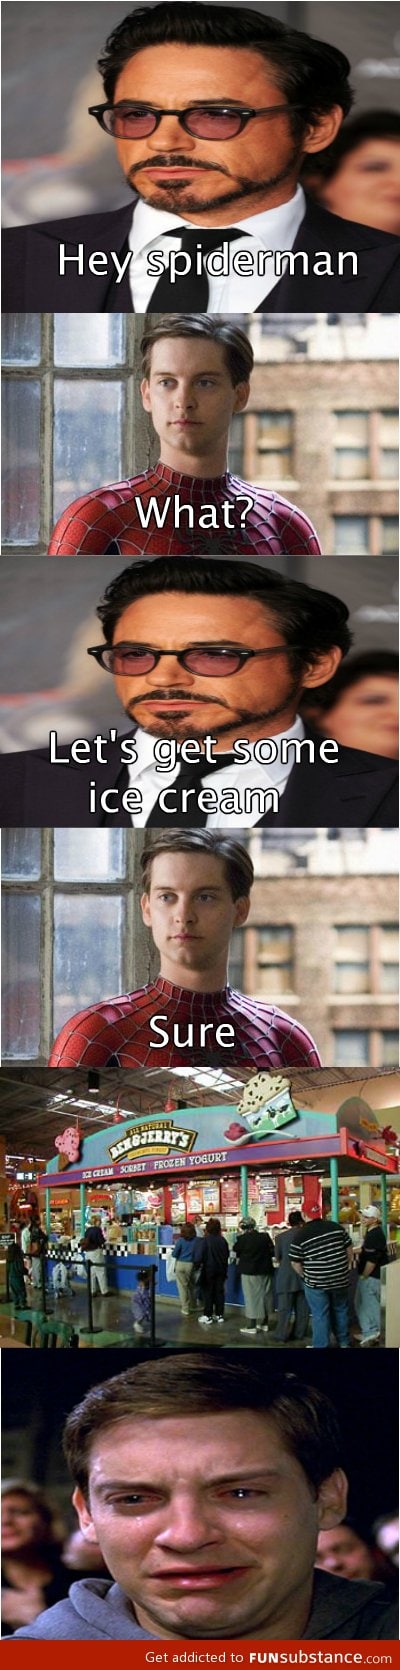 Spiderman gets ice cream